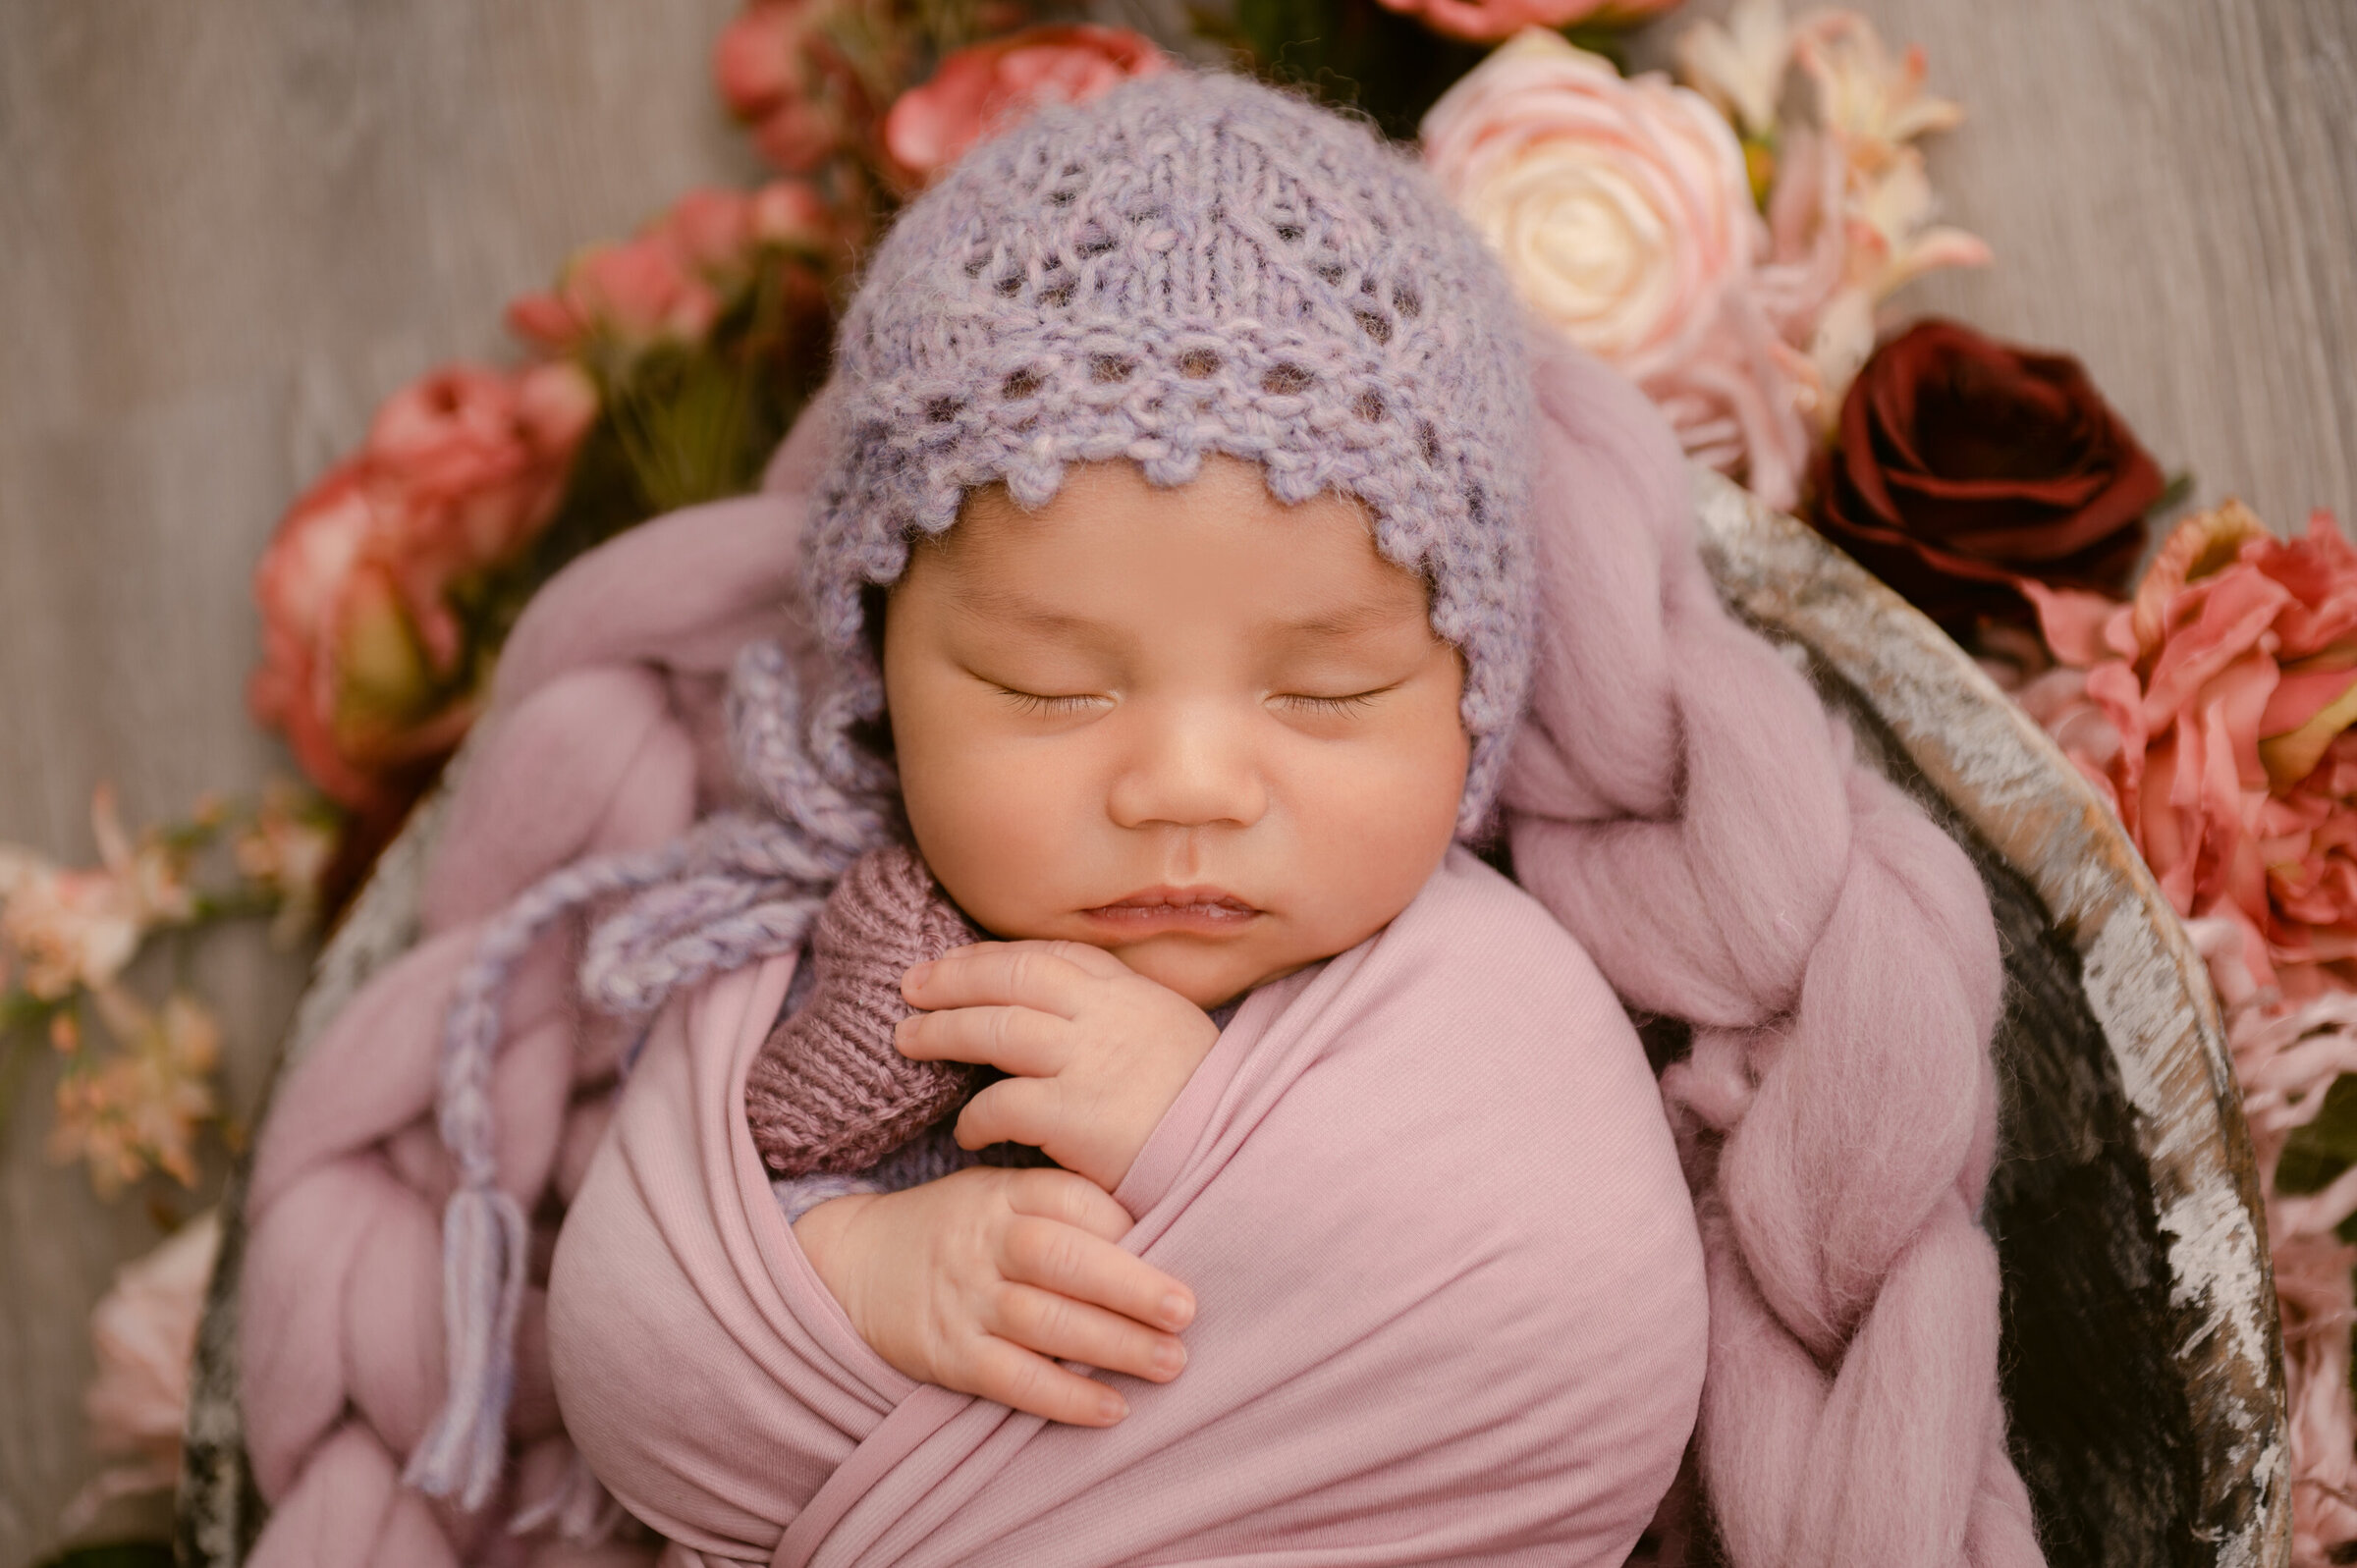 Nicole Hollenkamp - Baby Photographer | Princeton Minnesota | Photographing Newborns, Pregnancy,  Babies, Families in studio and outdoors